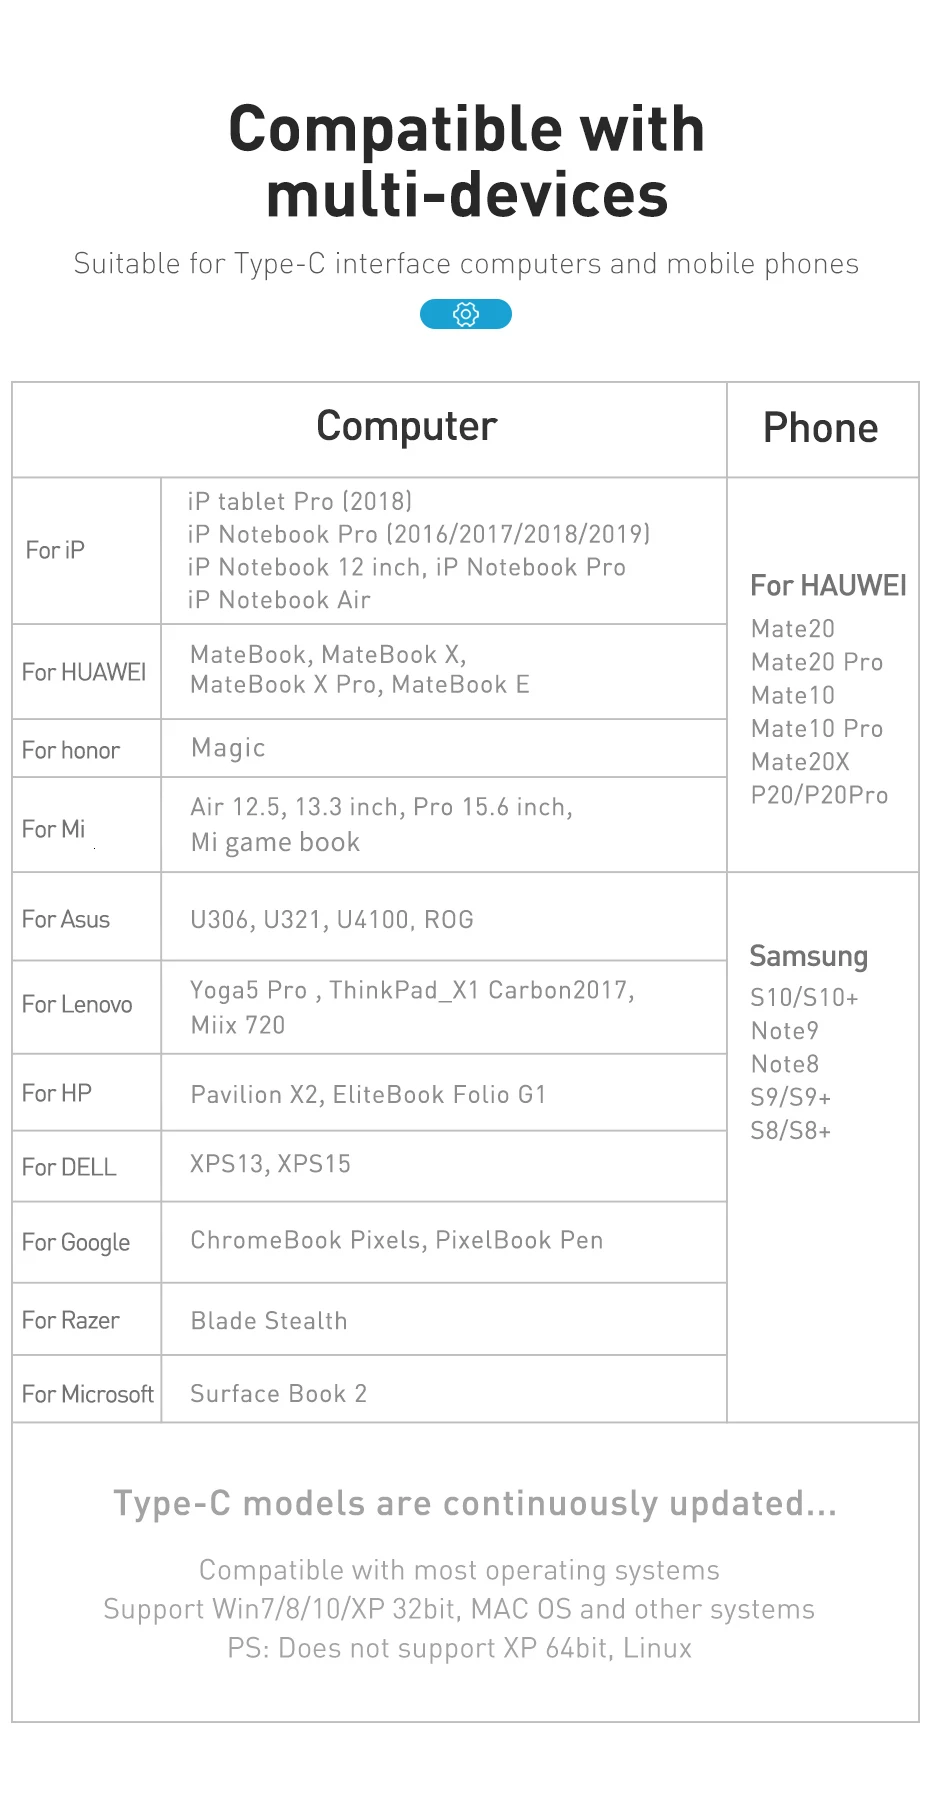 USB C концентратор Baseus для iPad Pro 12,9 11 type C концентратор для HDMI USB 3,0 PD порт 3,5 мм разъем USB-C usb-хаб адаптер для MacBook Pro